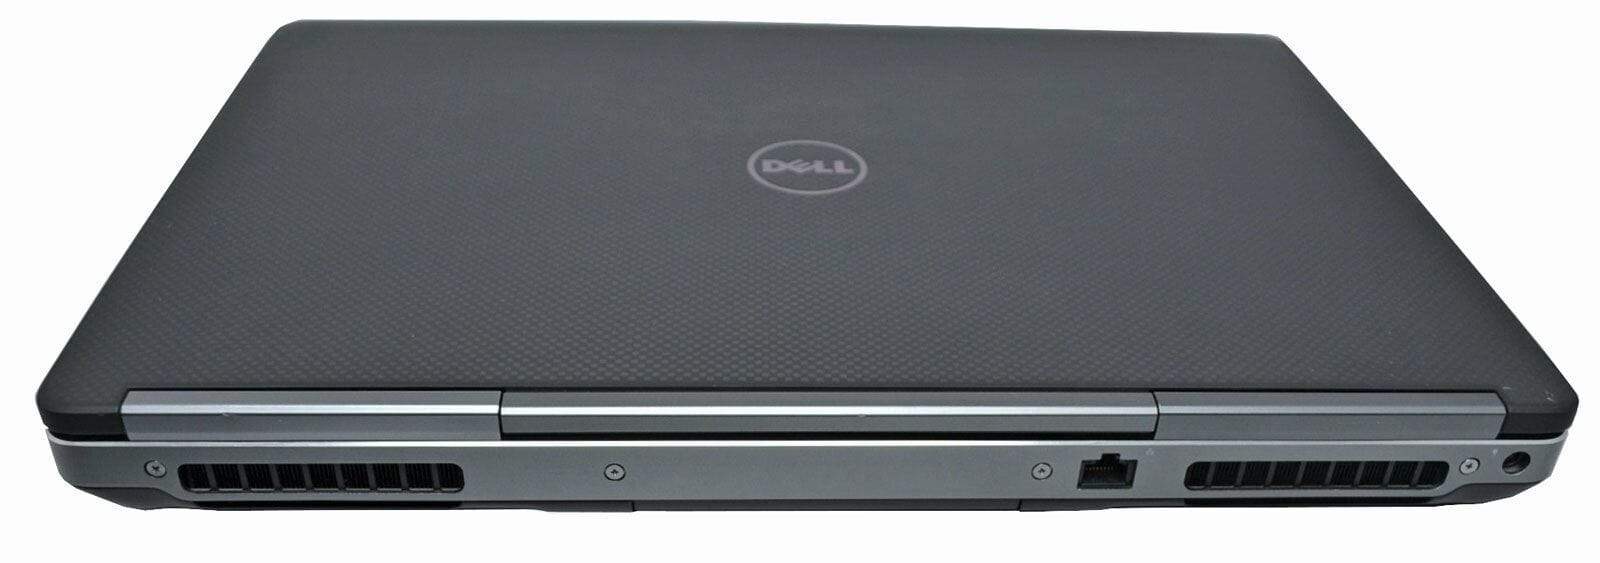 Dell Precision 7710 CAD IPS Workstation Laptop: 16GB RAM, 512GB, FirePro - CruiseTech